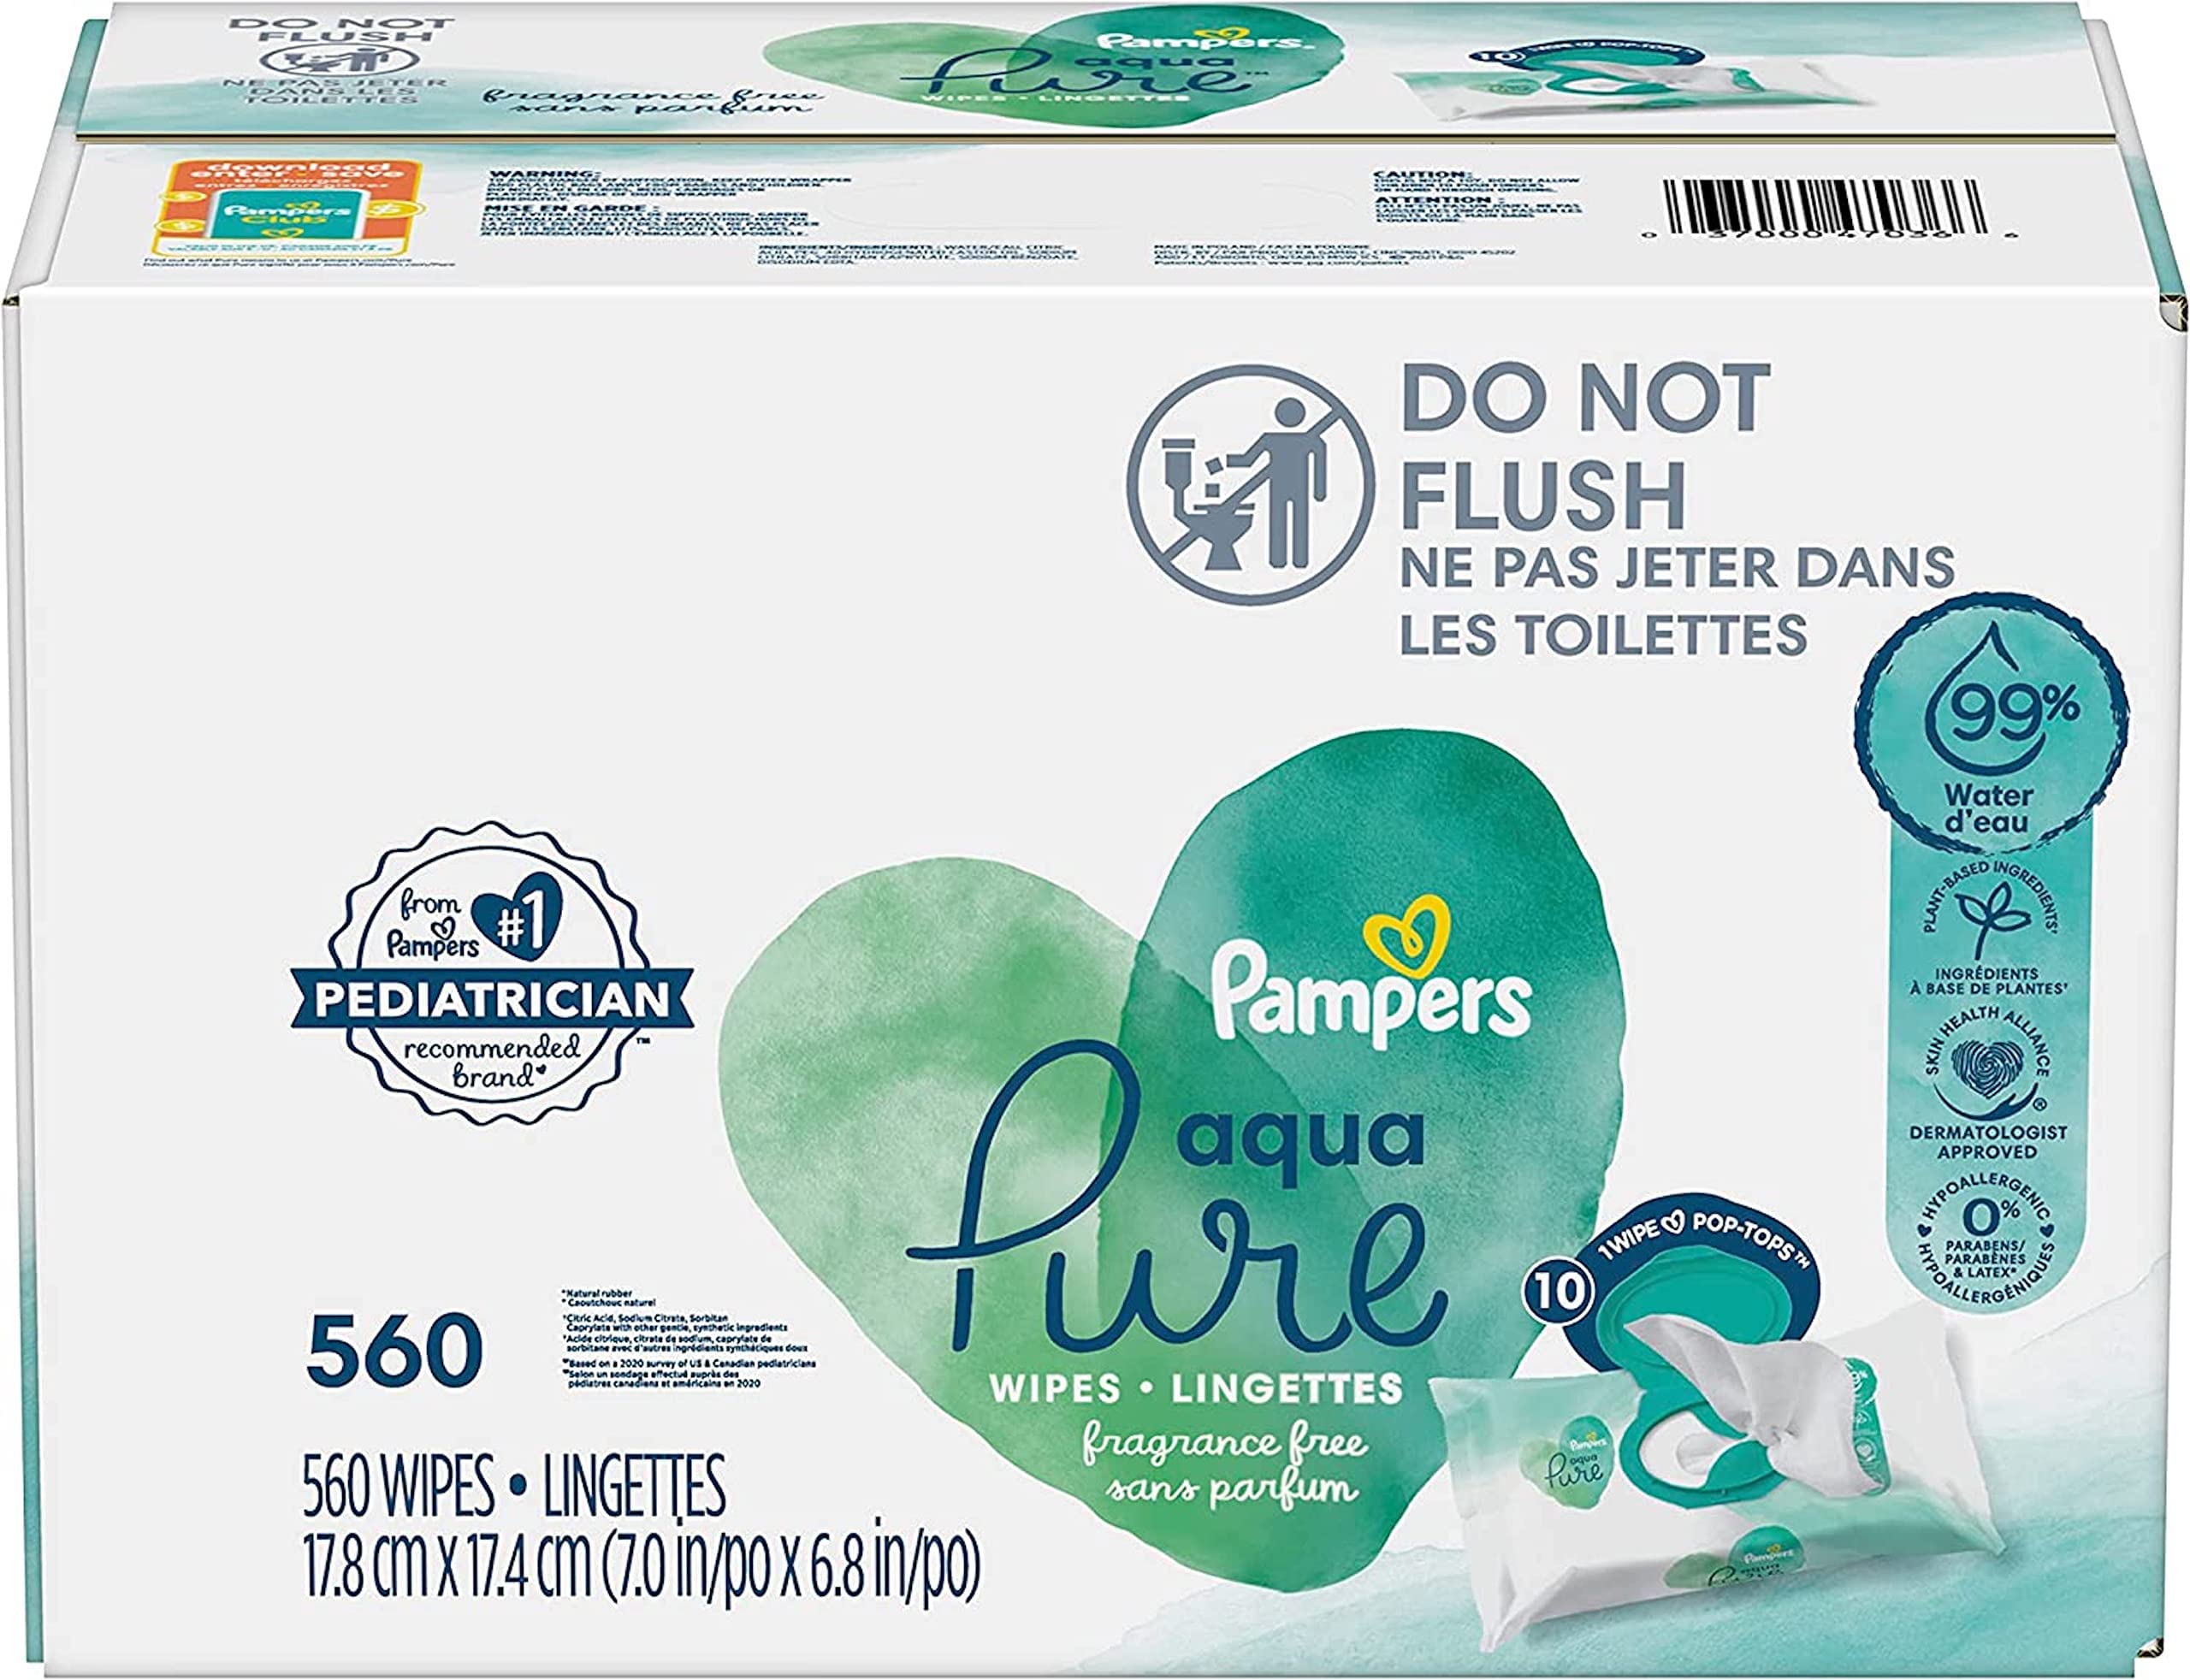 pampers aqua pure wipes ingredients